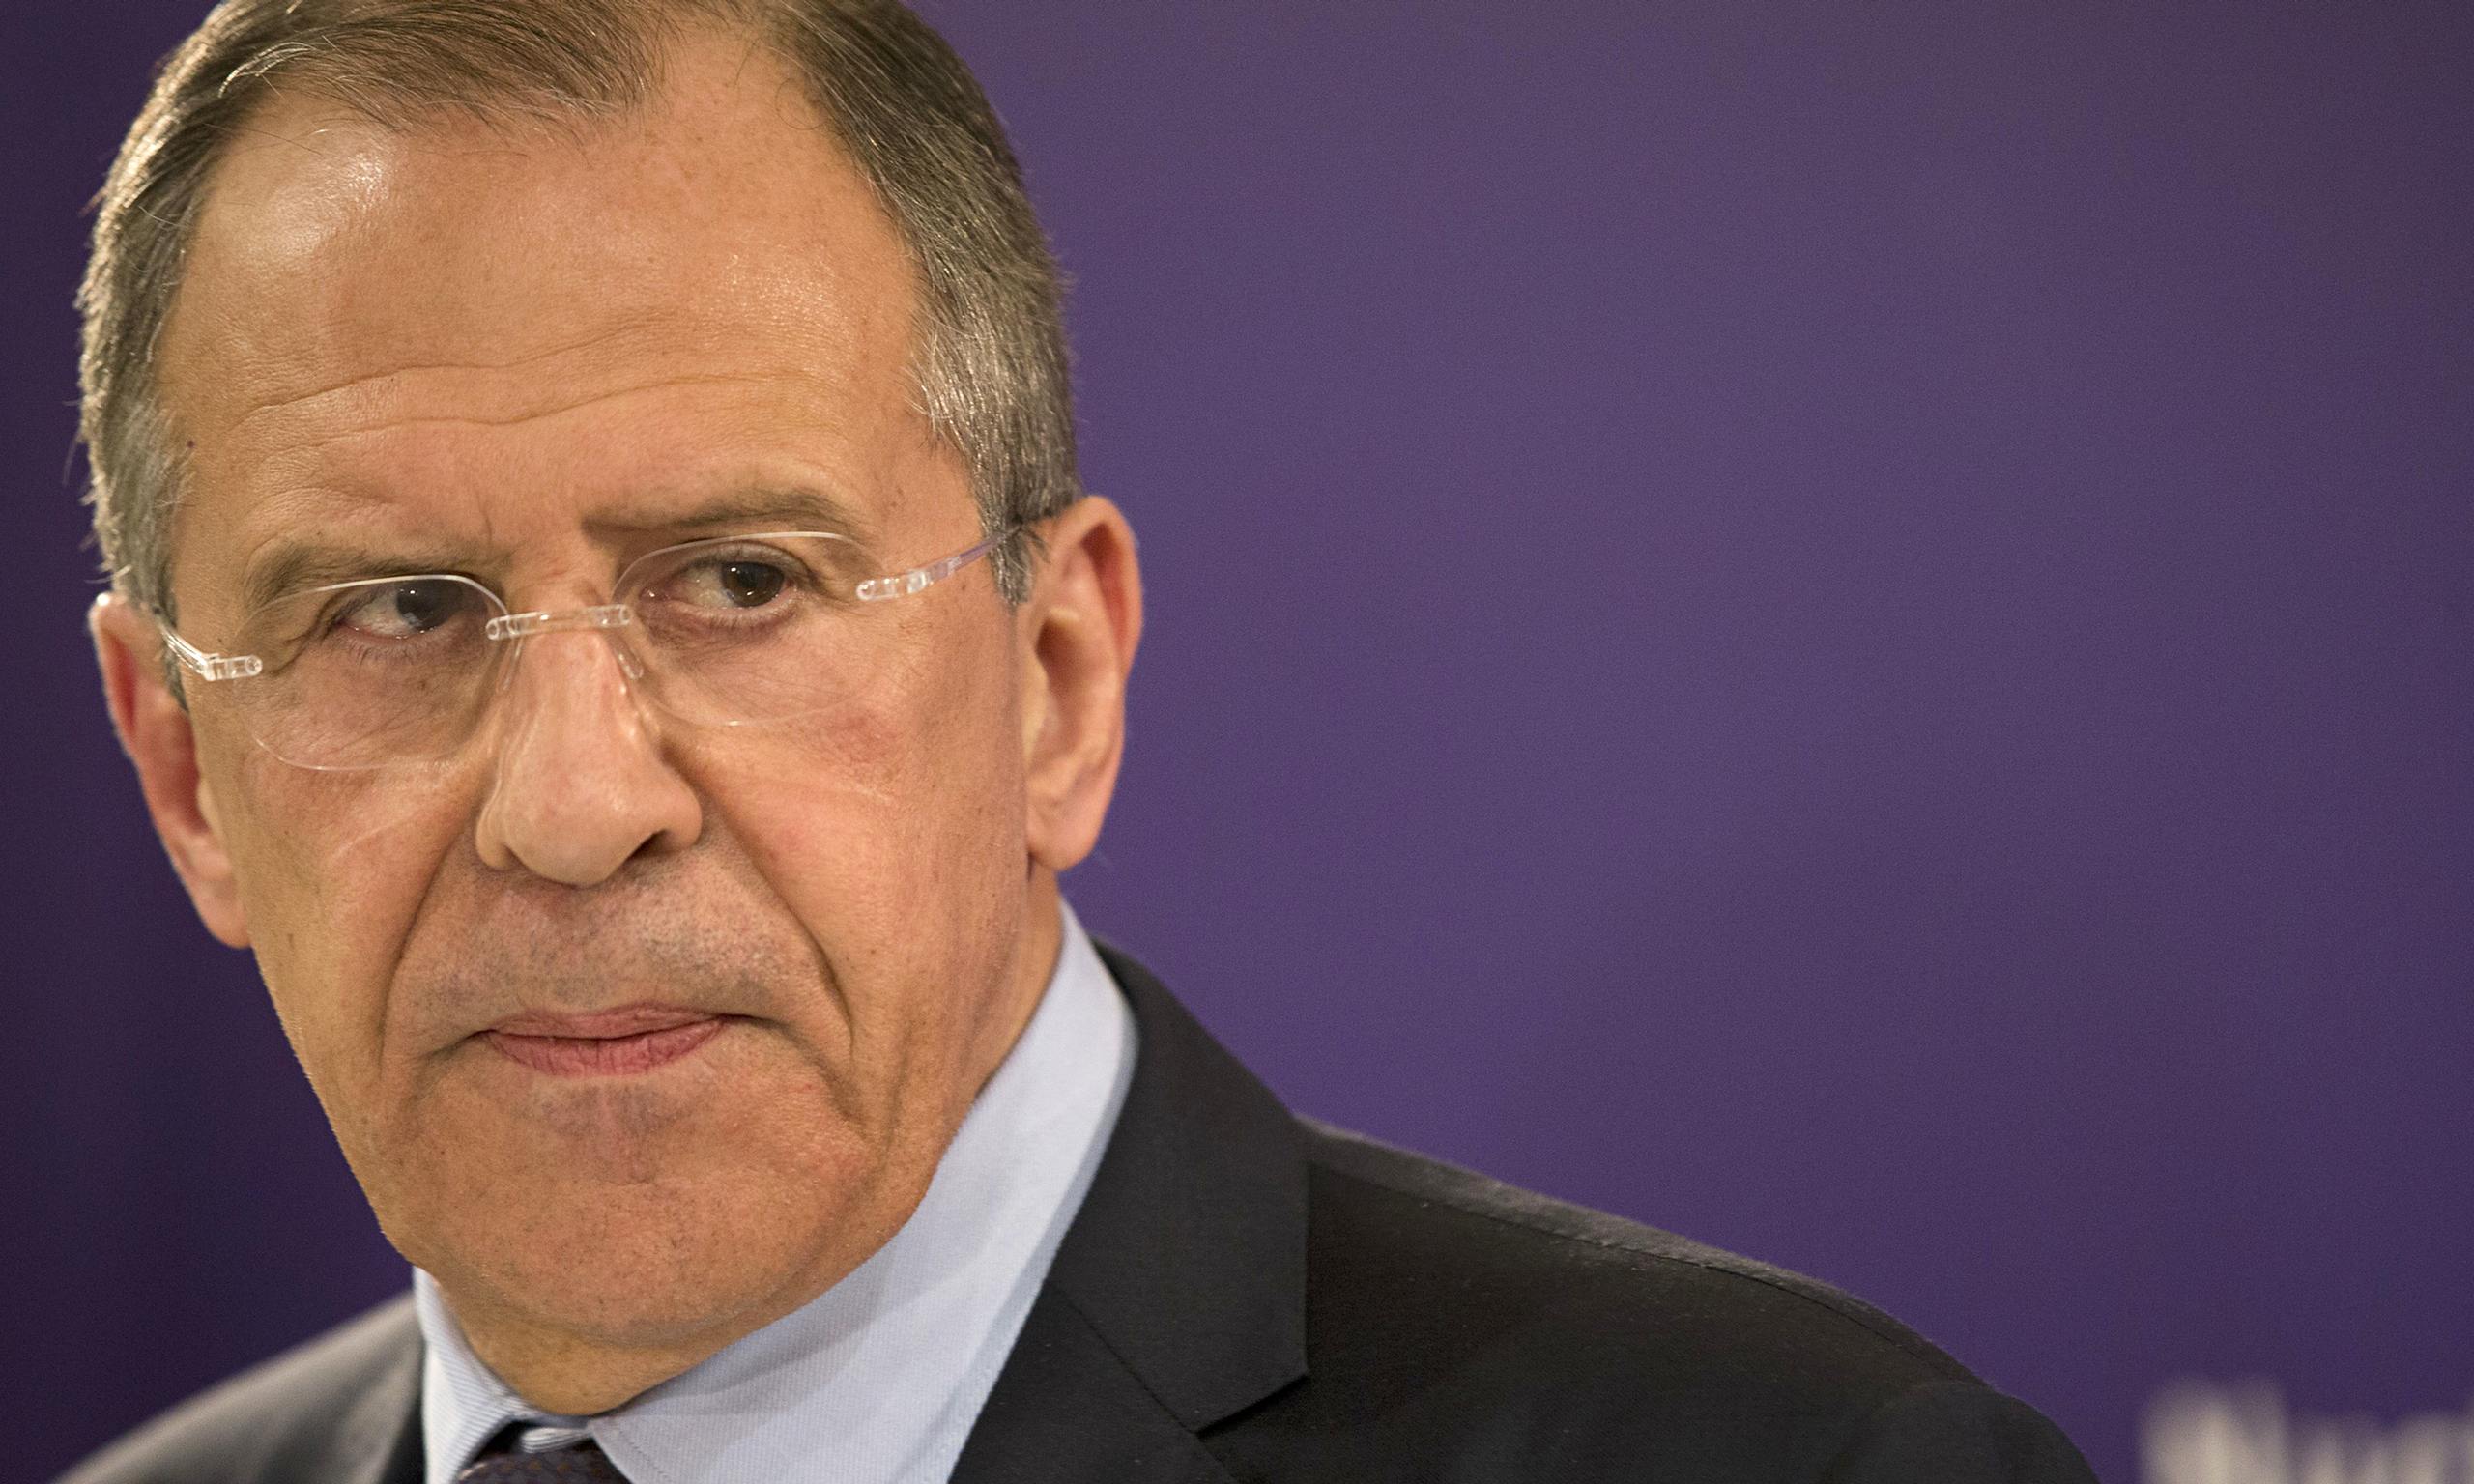 Lavrov: Iran, Russia, Syria urge careful investigation into Khan Shayhkun chemical incident